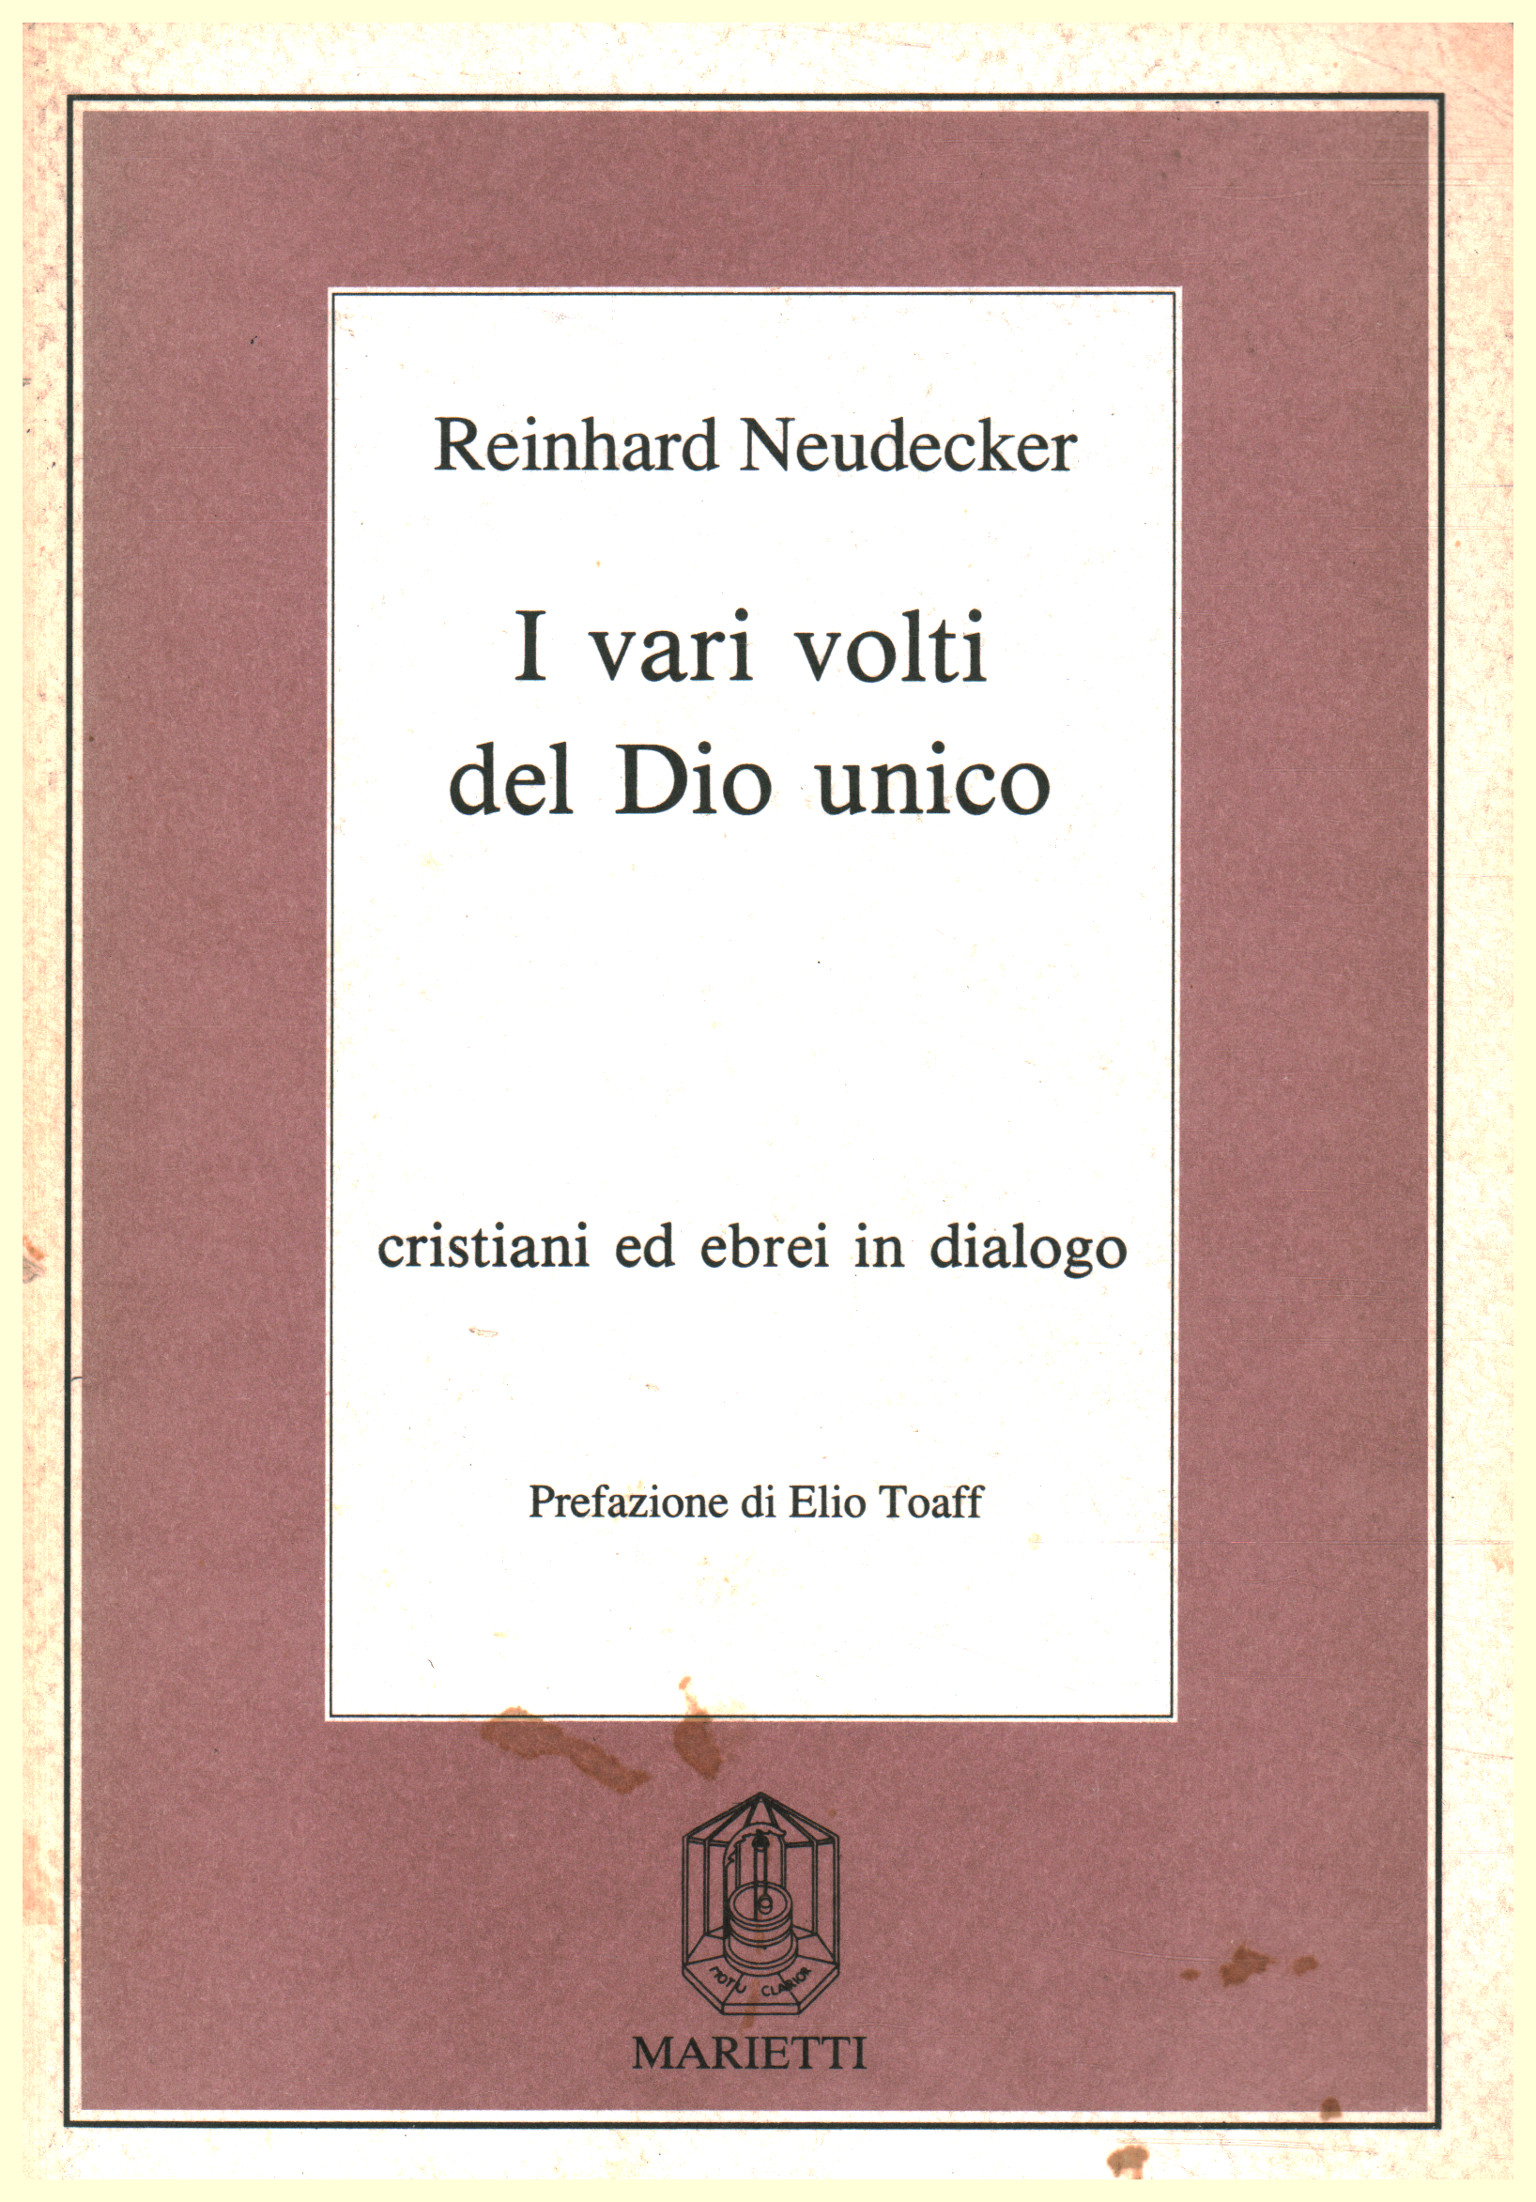 I vari volti del Dio unico, Reinhard Neudecker